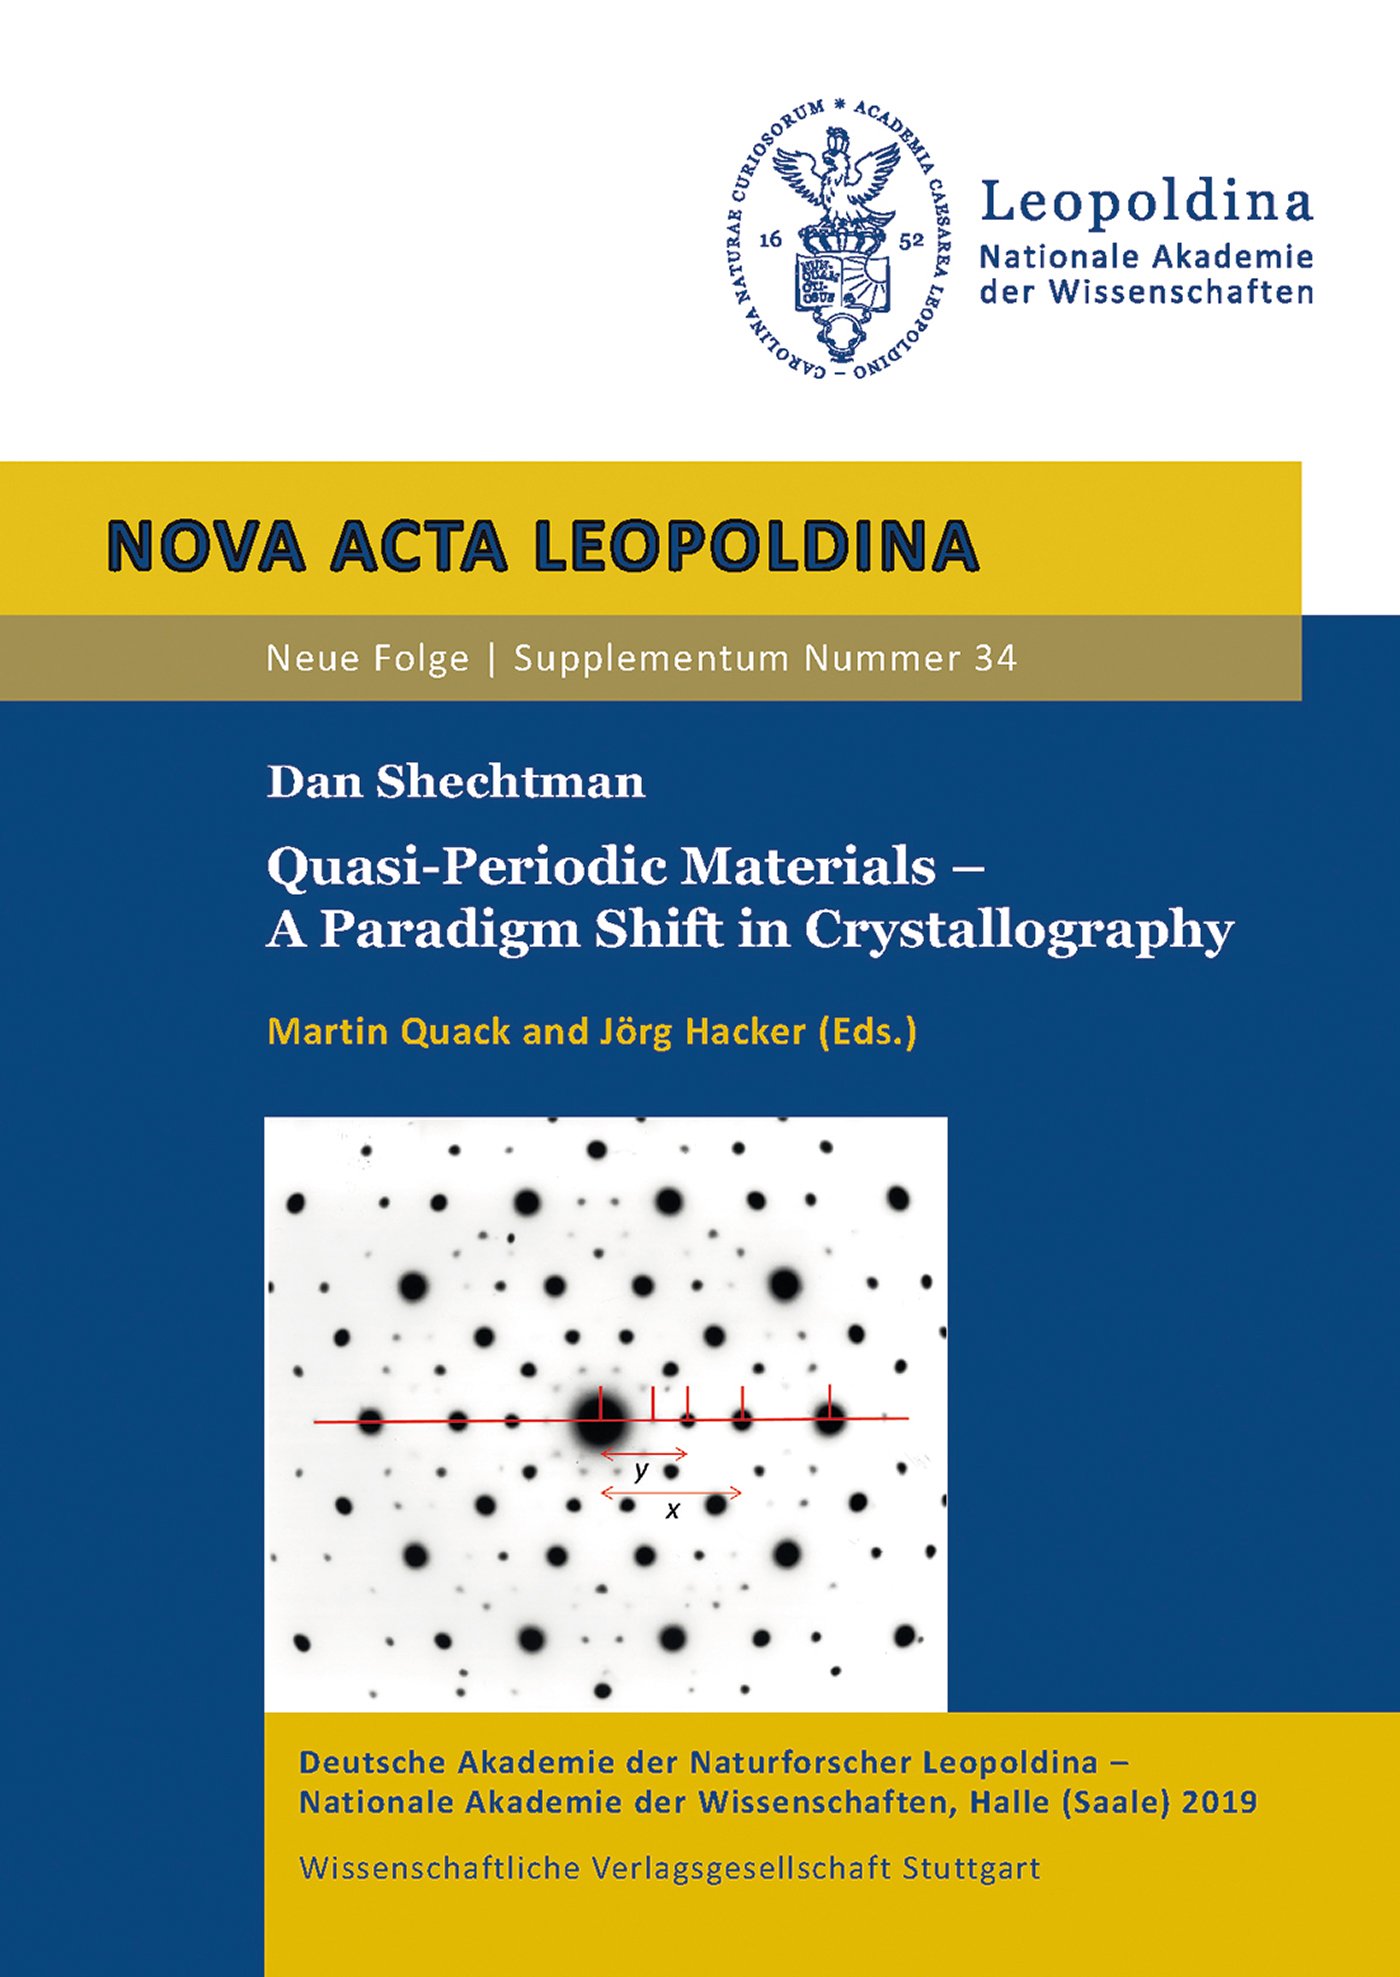 Dan Shechtman. Quasi-Periodic Materials – A Paradigm Shift in Crystallography